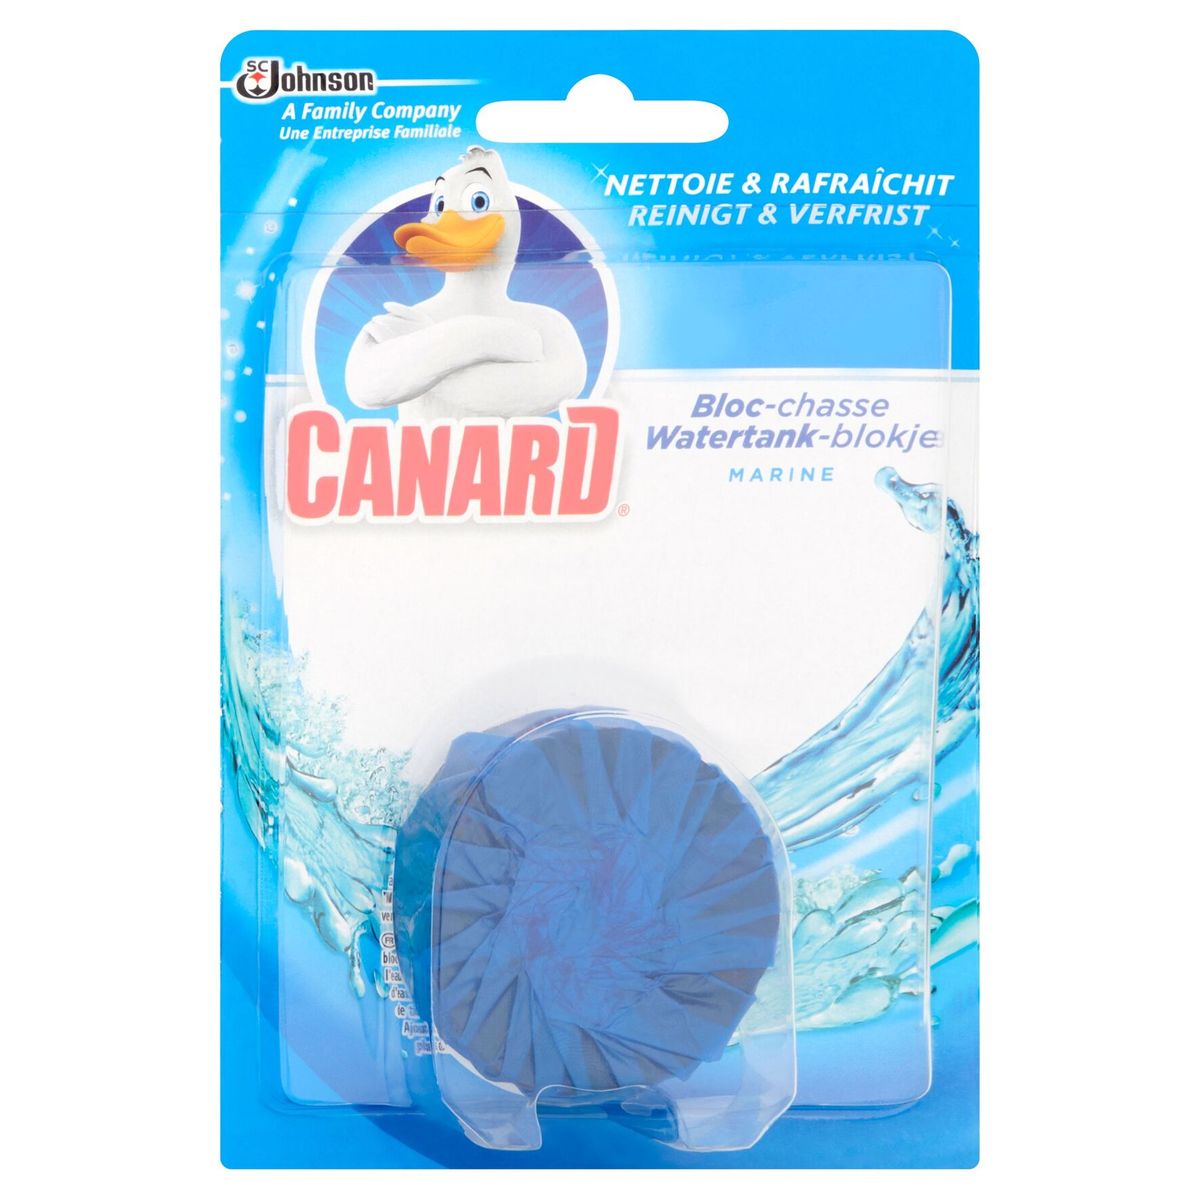 Canard®-Bloc-Chasse Marine -50 g